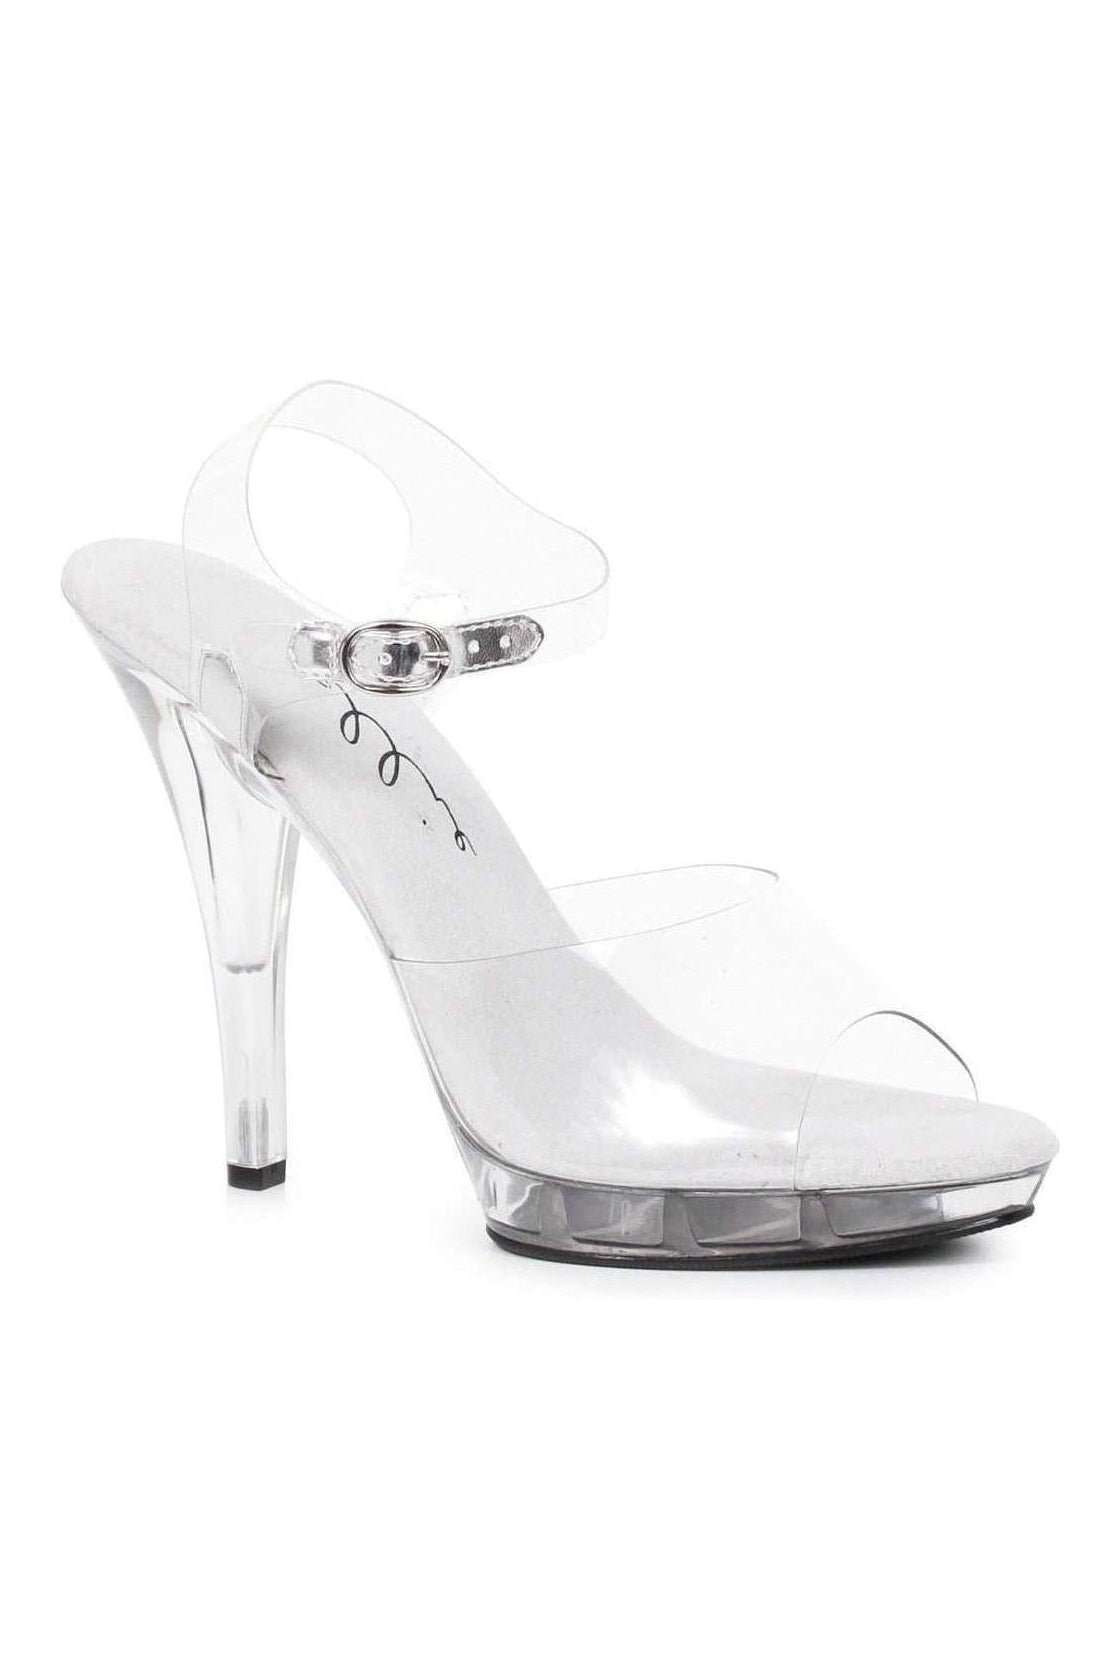 wide width glass heels